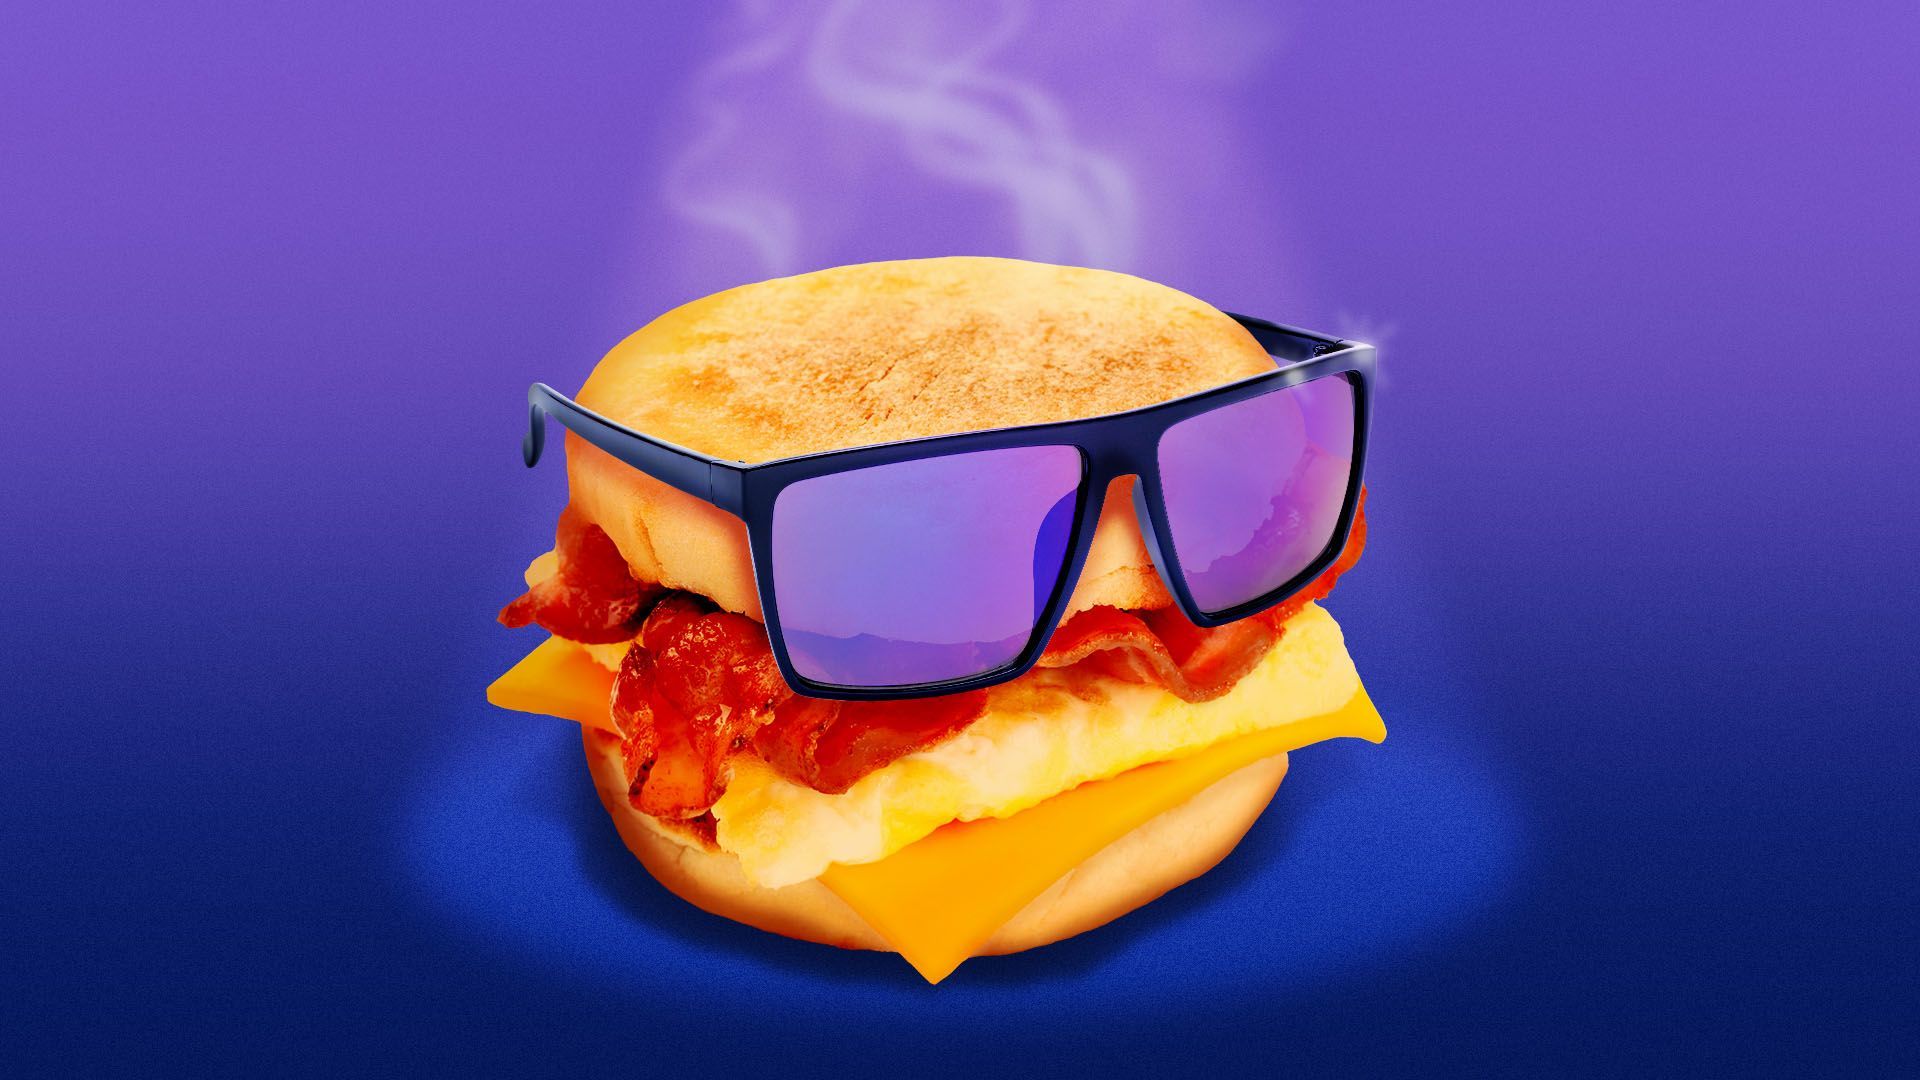 Illustration of a breakfast sandwich sporting sunglasses under a light